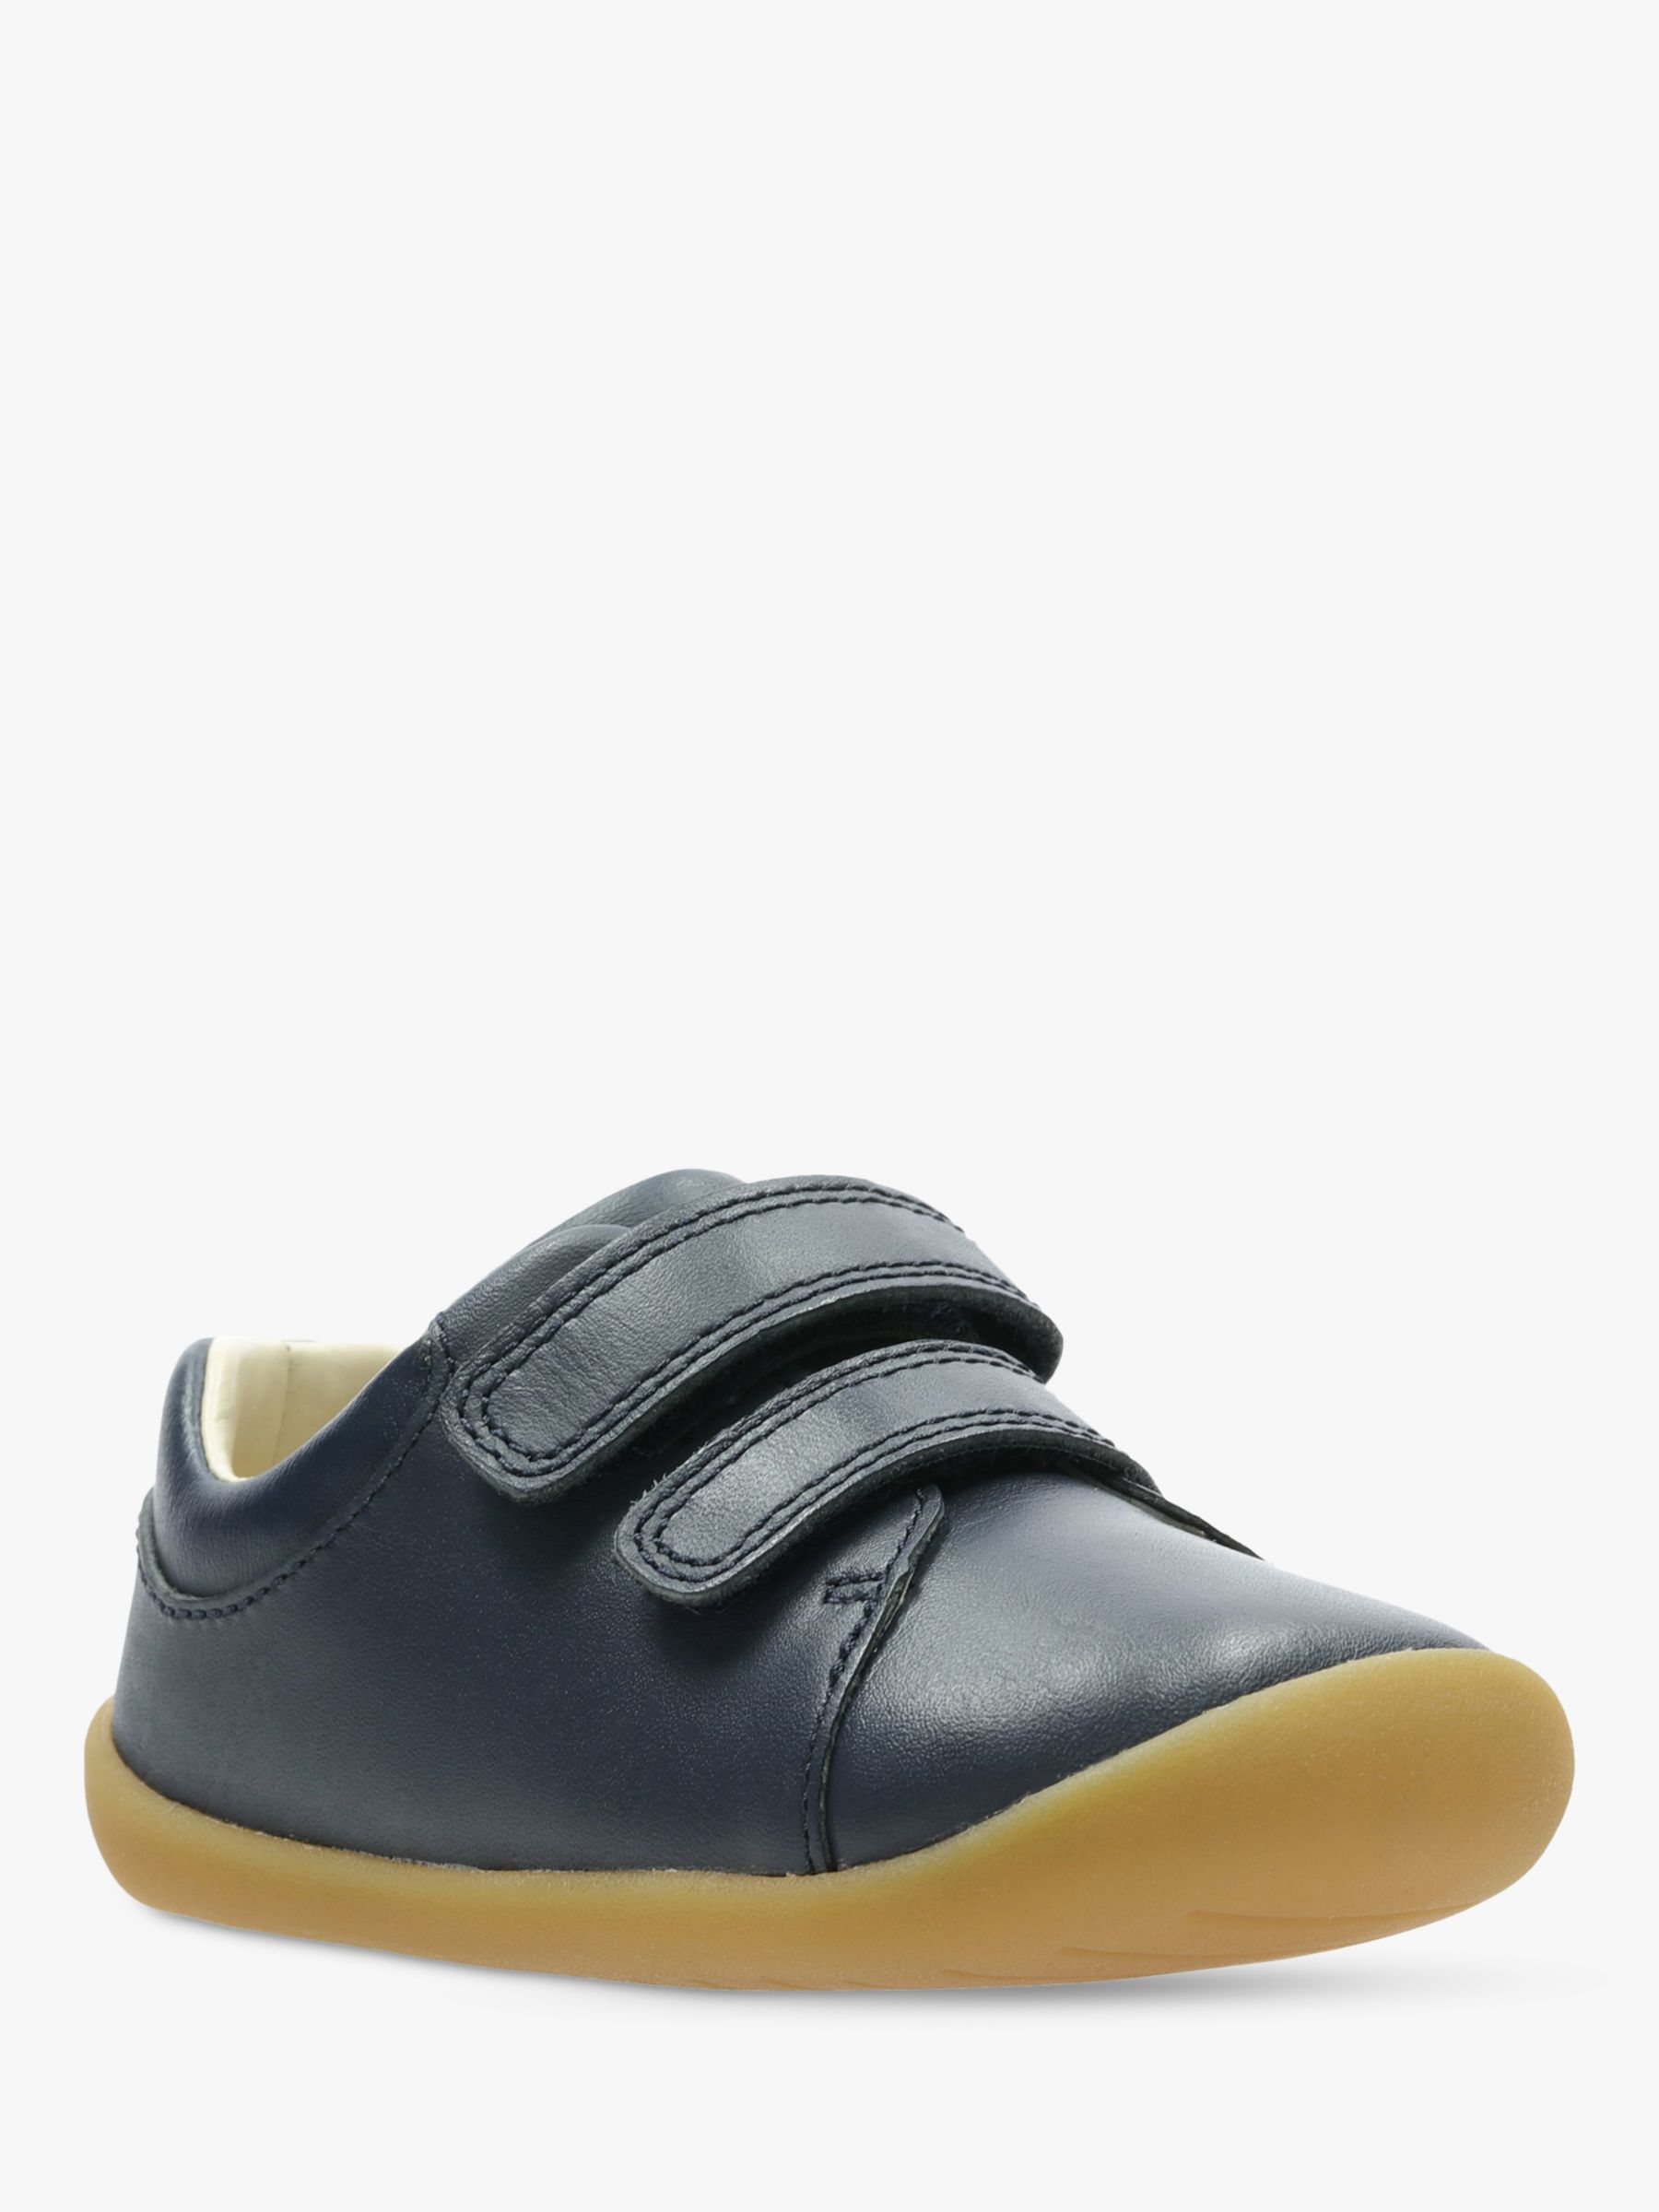 Buy Clarks Kids' Roamer Craft Leather Riptape Shoes, Navy Online at johnlewis.com